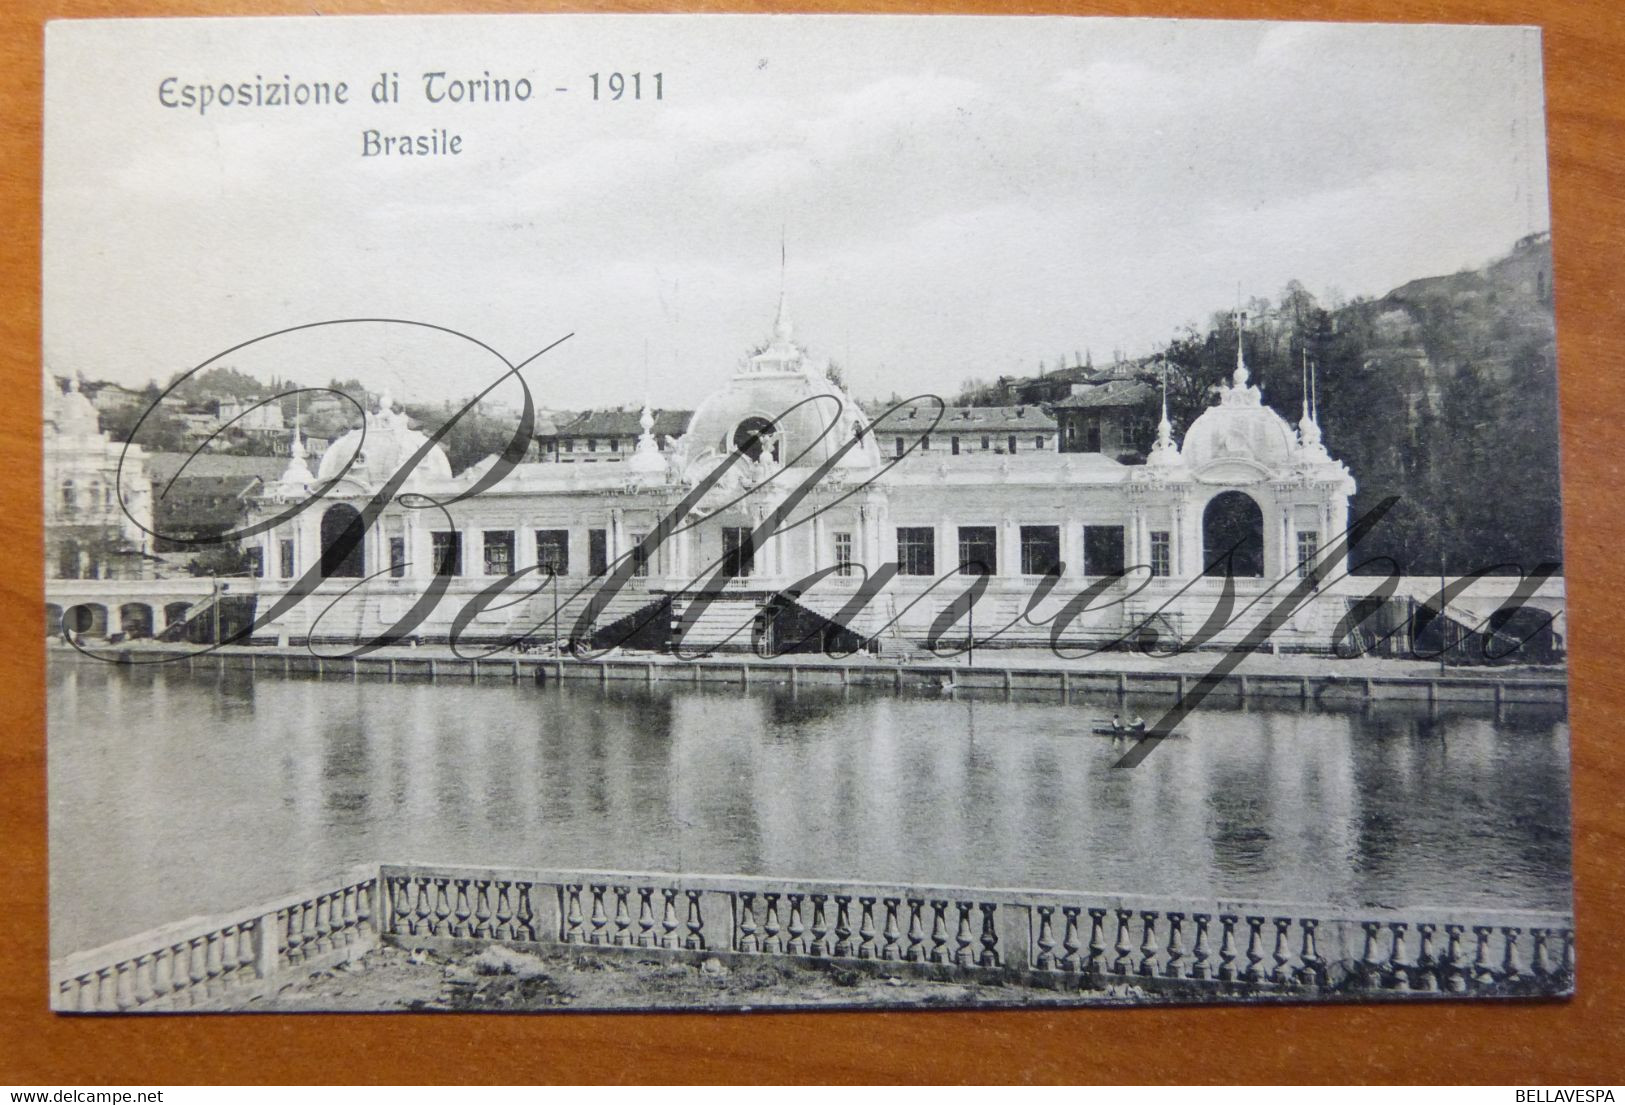 Torino. Espositione Exposition. 1911 Bresil Brasile. N° 13274 - Ausstellungen